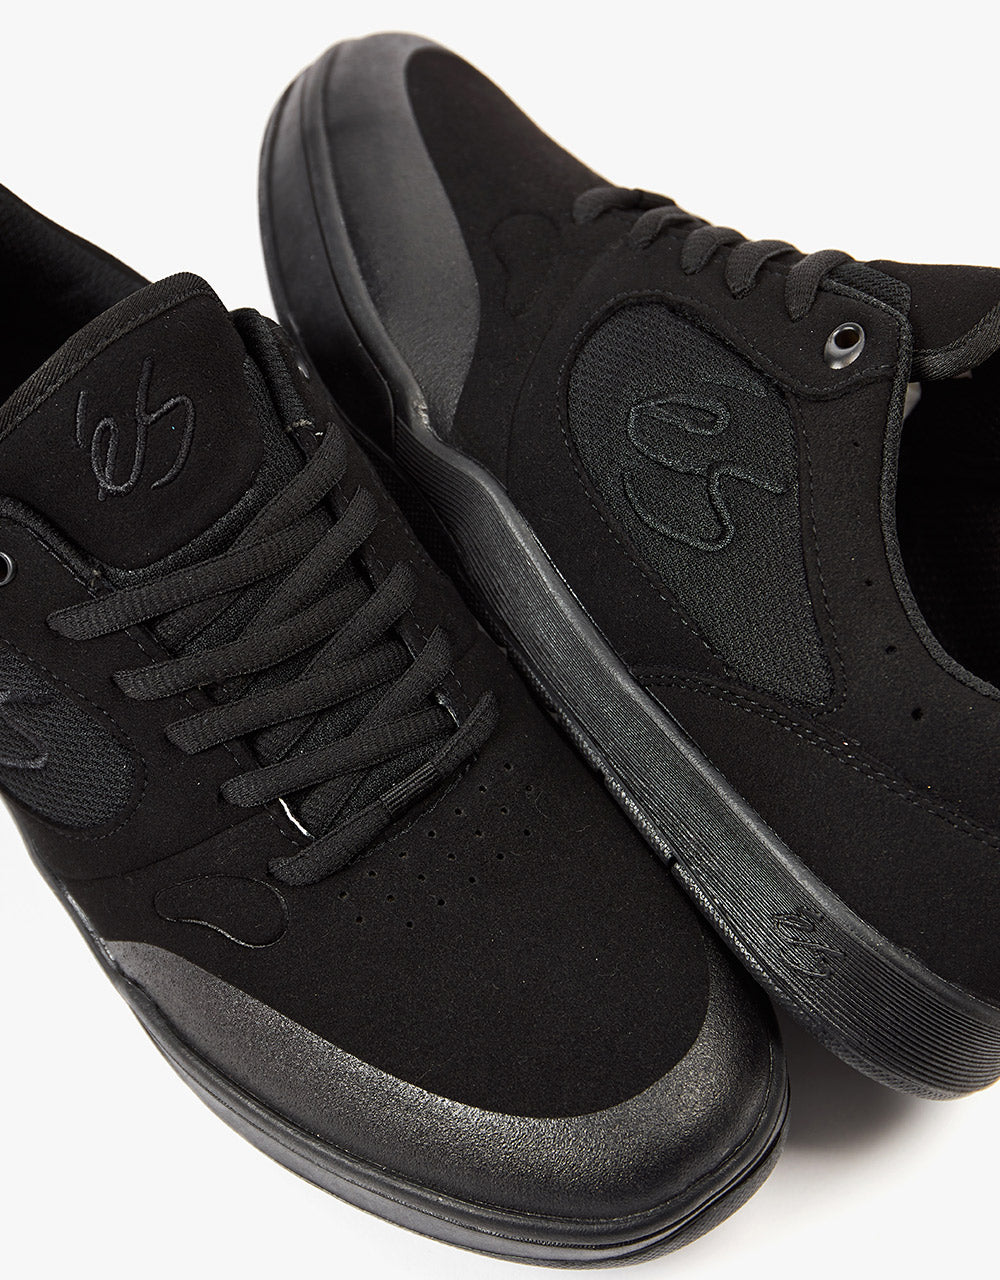 éS Swift 1.5 Skate Shoes - Black/Black/Black